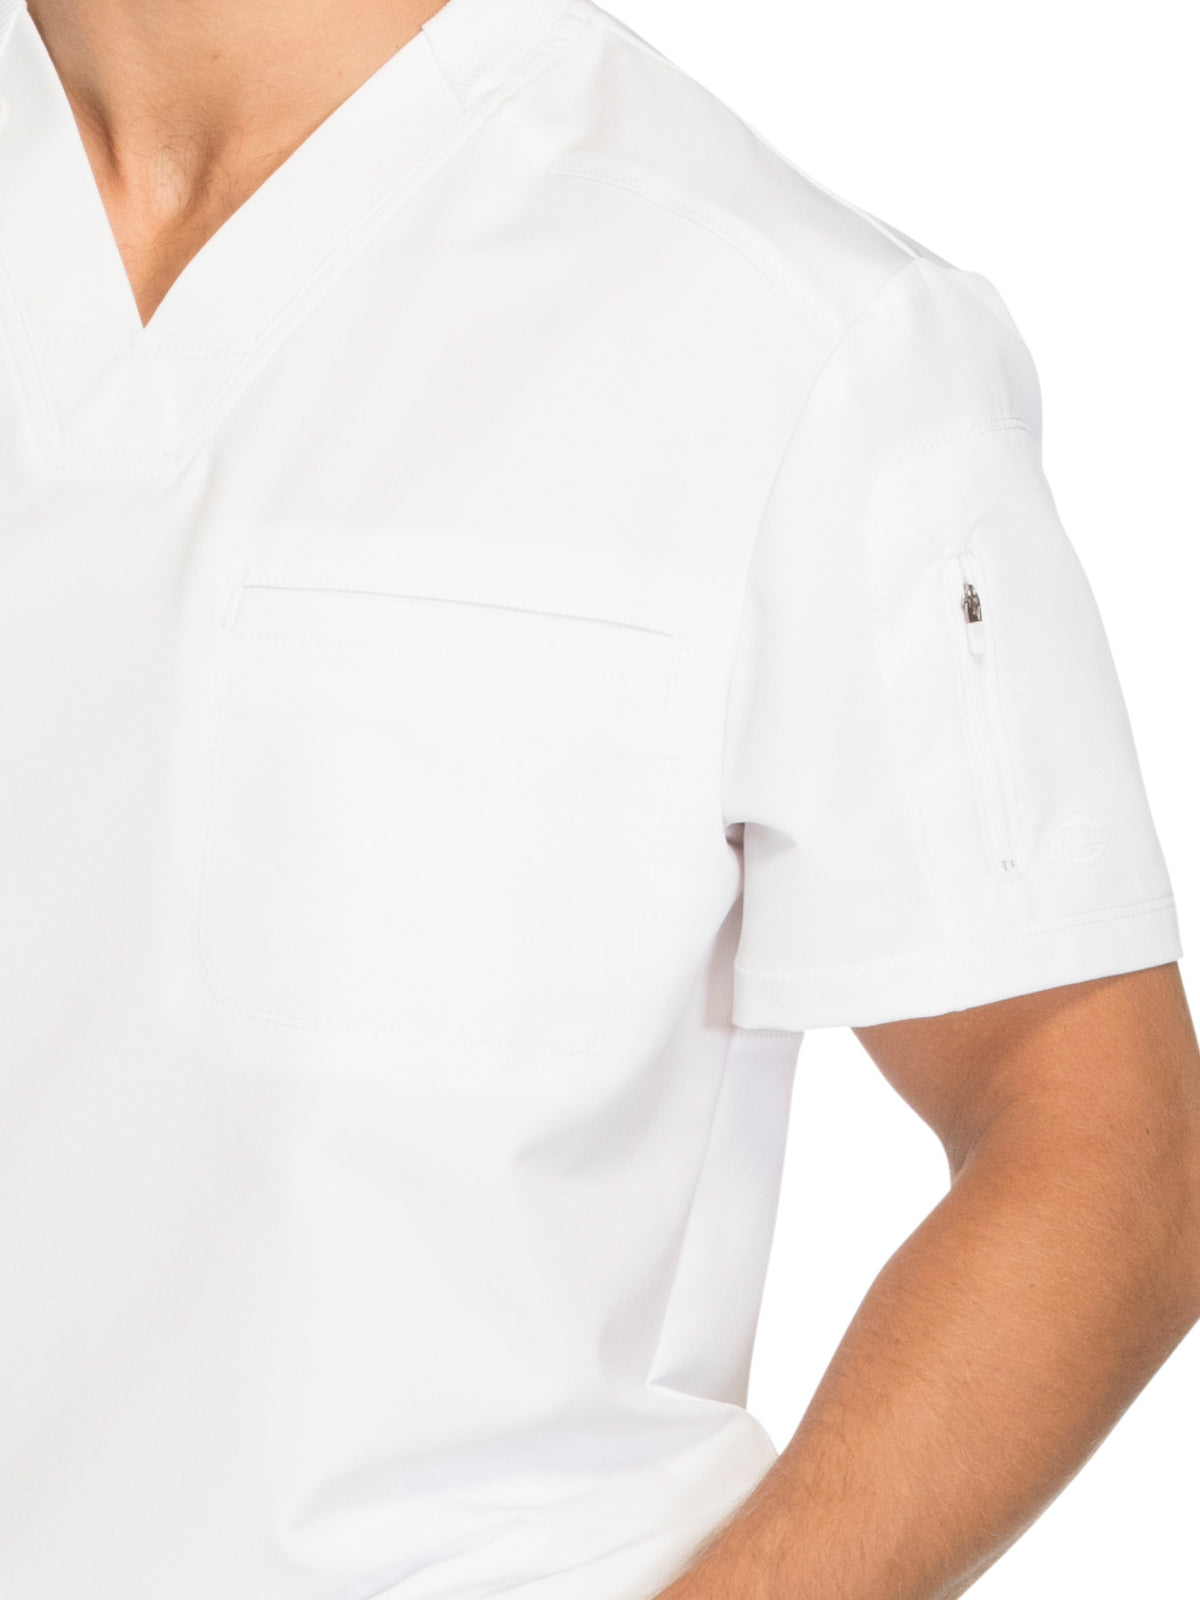 Men's 2-Pocket Tuckable Scrub Top - DK610 - White